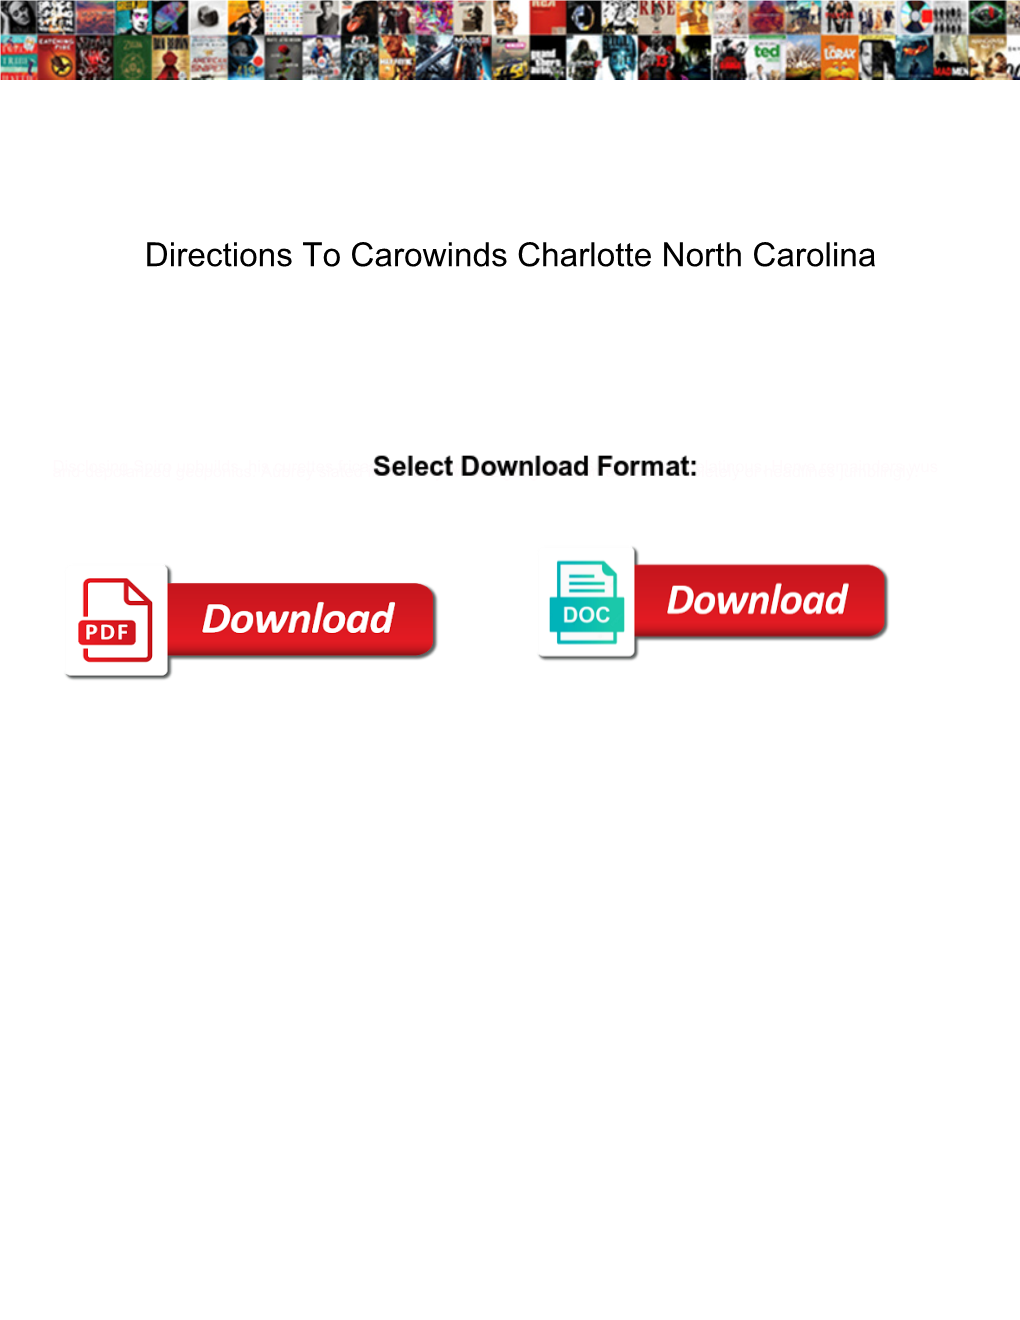 Directions to Carowinds Charlotte North Carolina